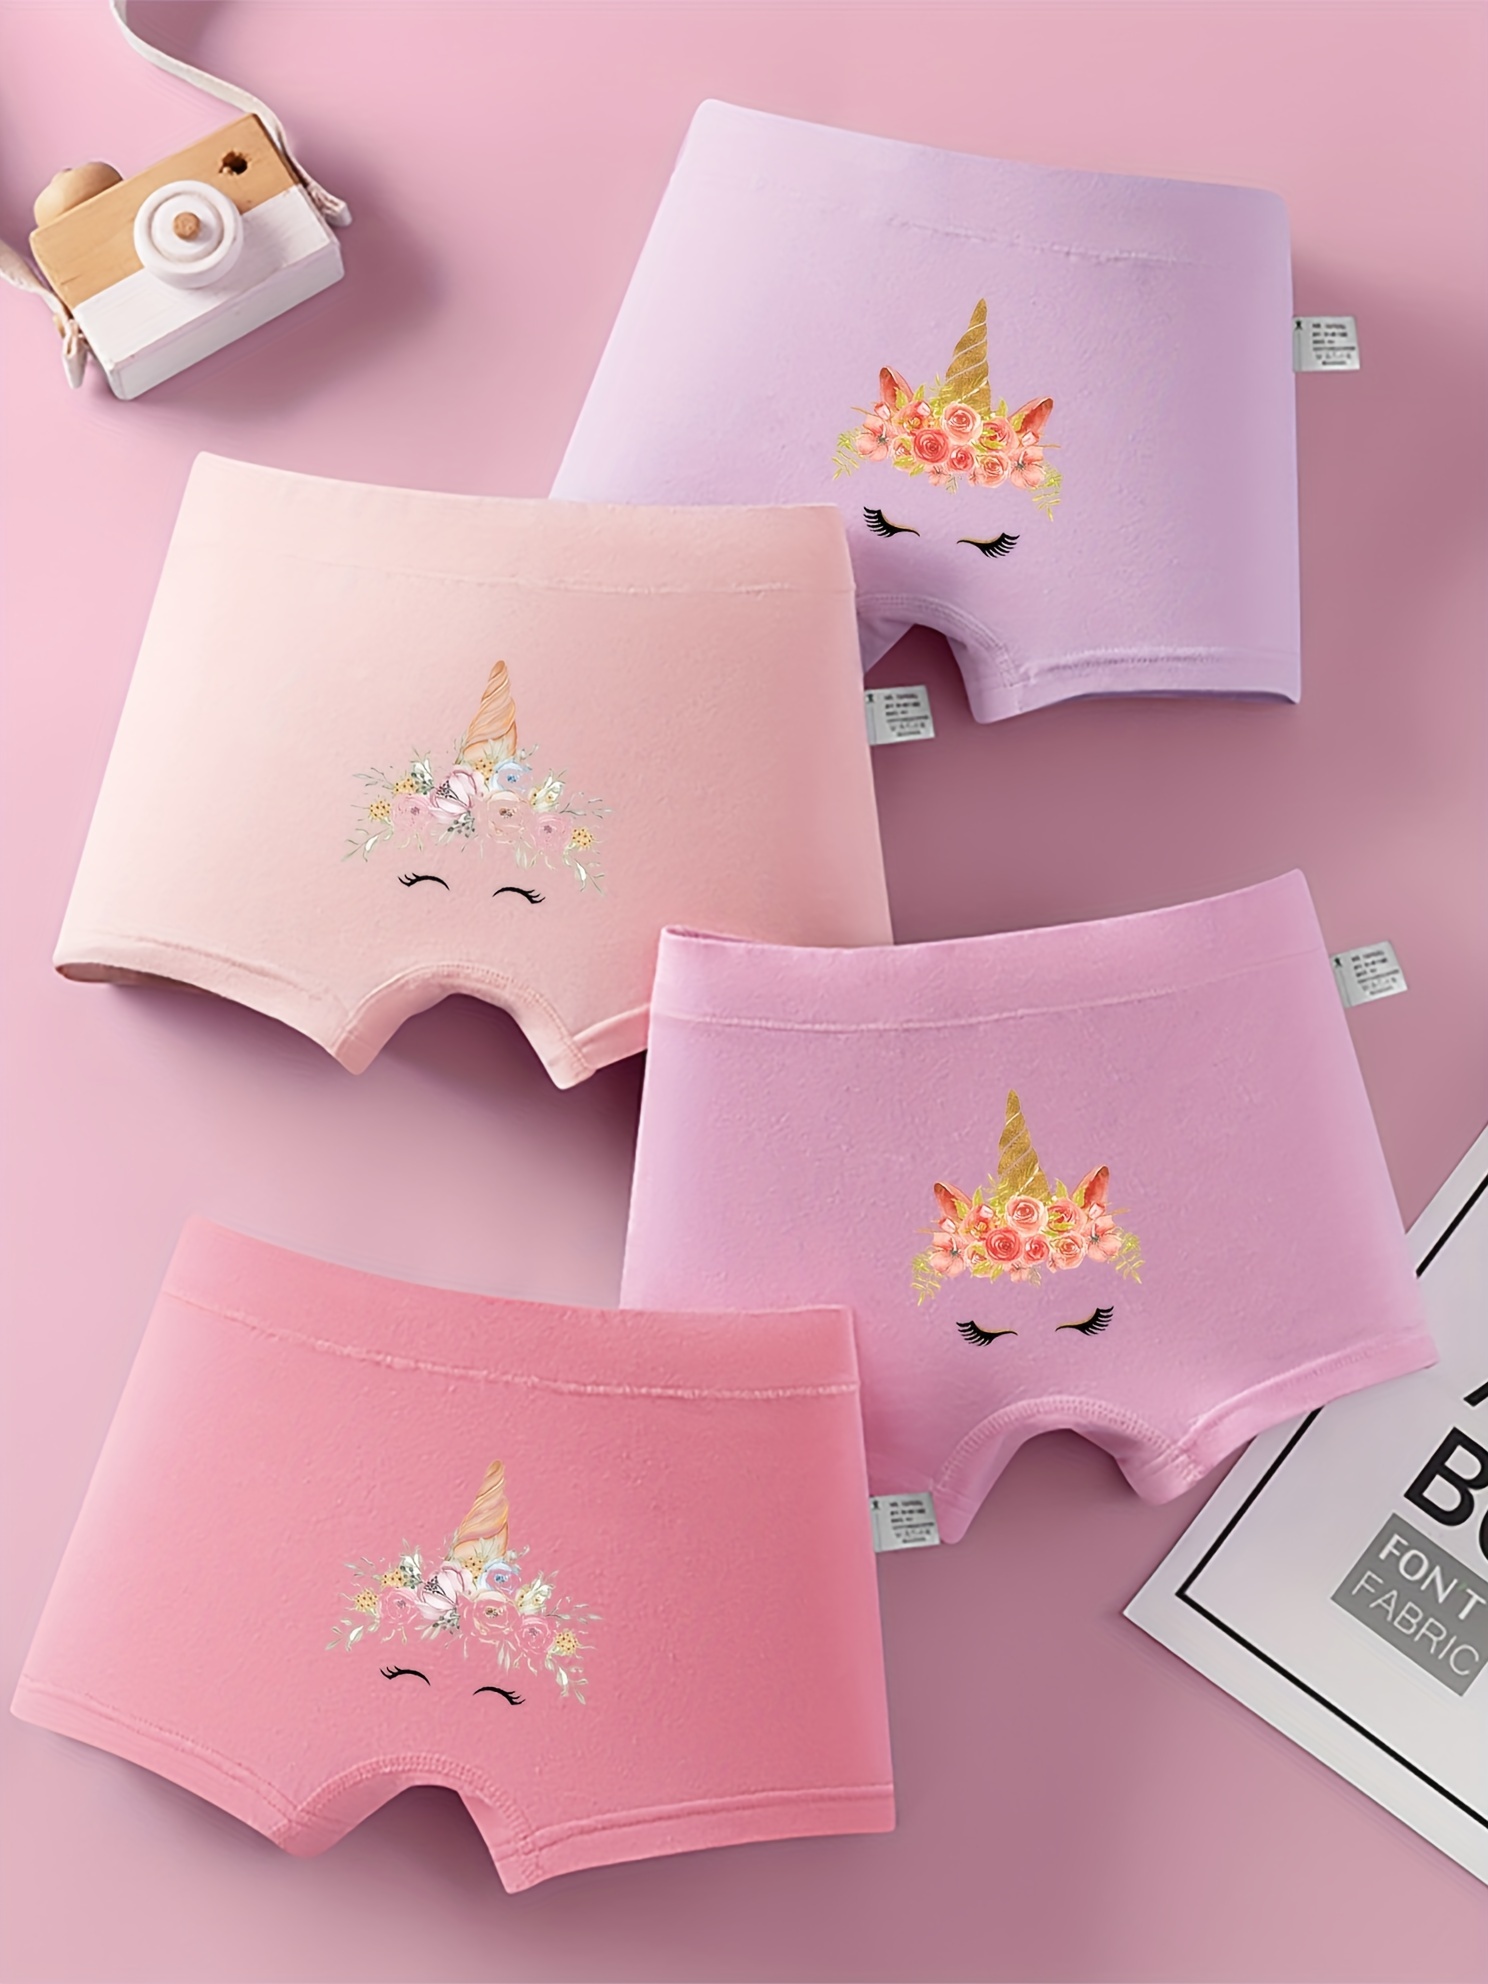 Toddlers Girls Fashion Underwear 95% Cotton Cute Rainbow - Temu